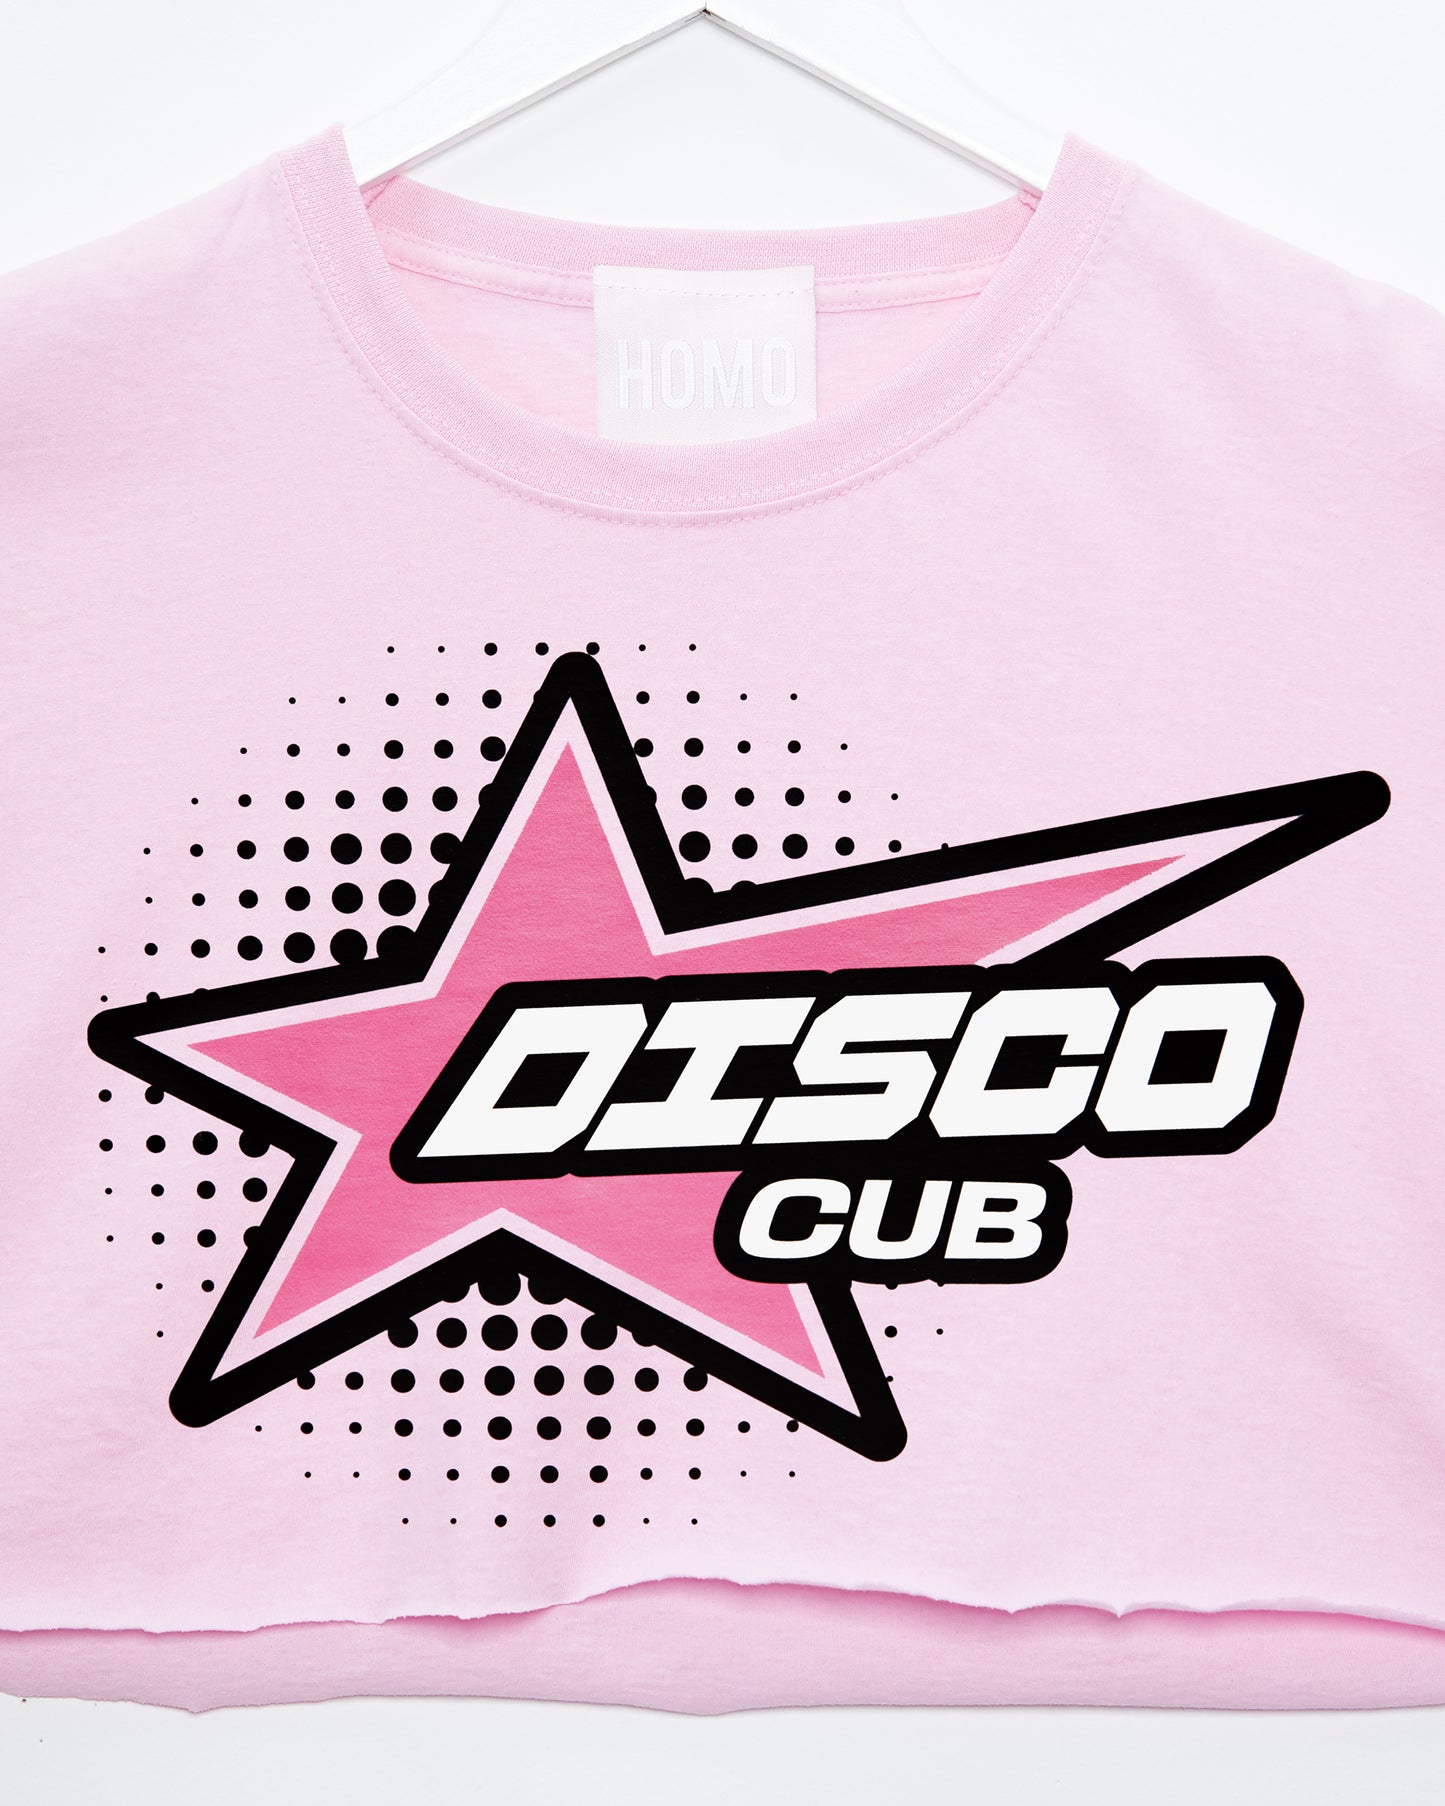 Disco cub on pink - sleeveless crop top.